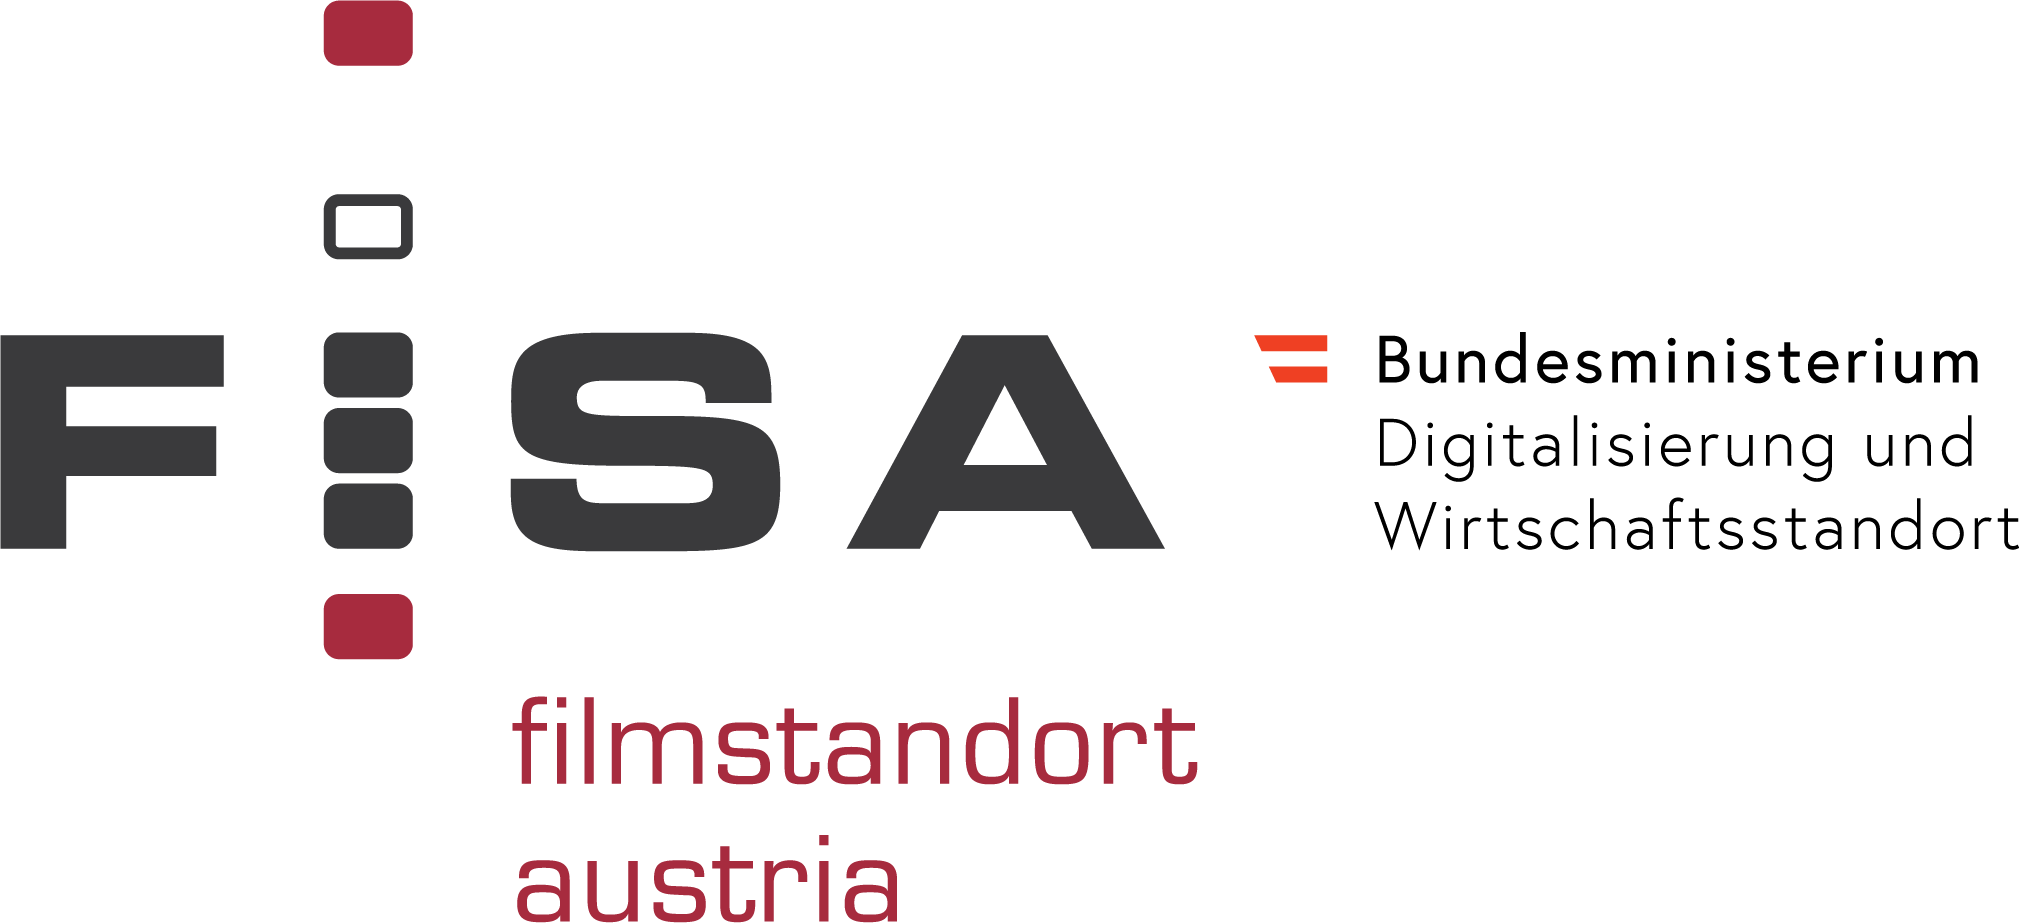 FISA - filmstandort austria